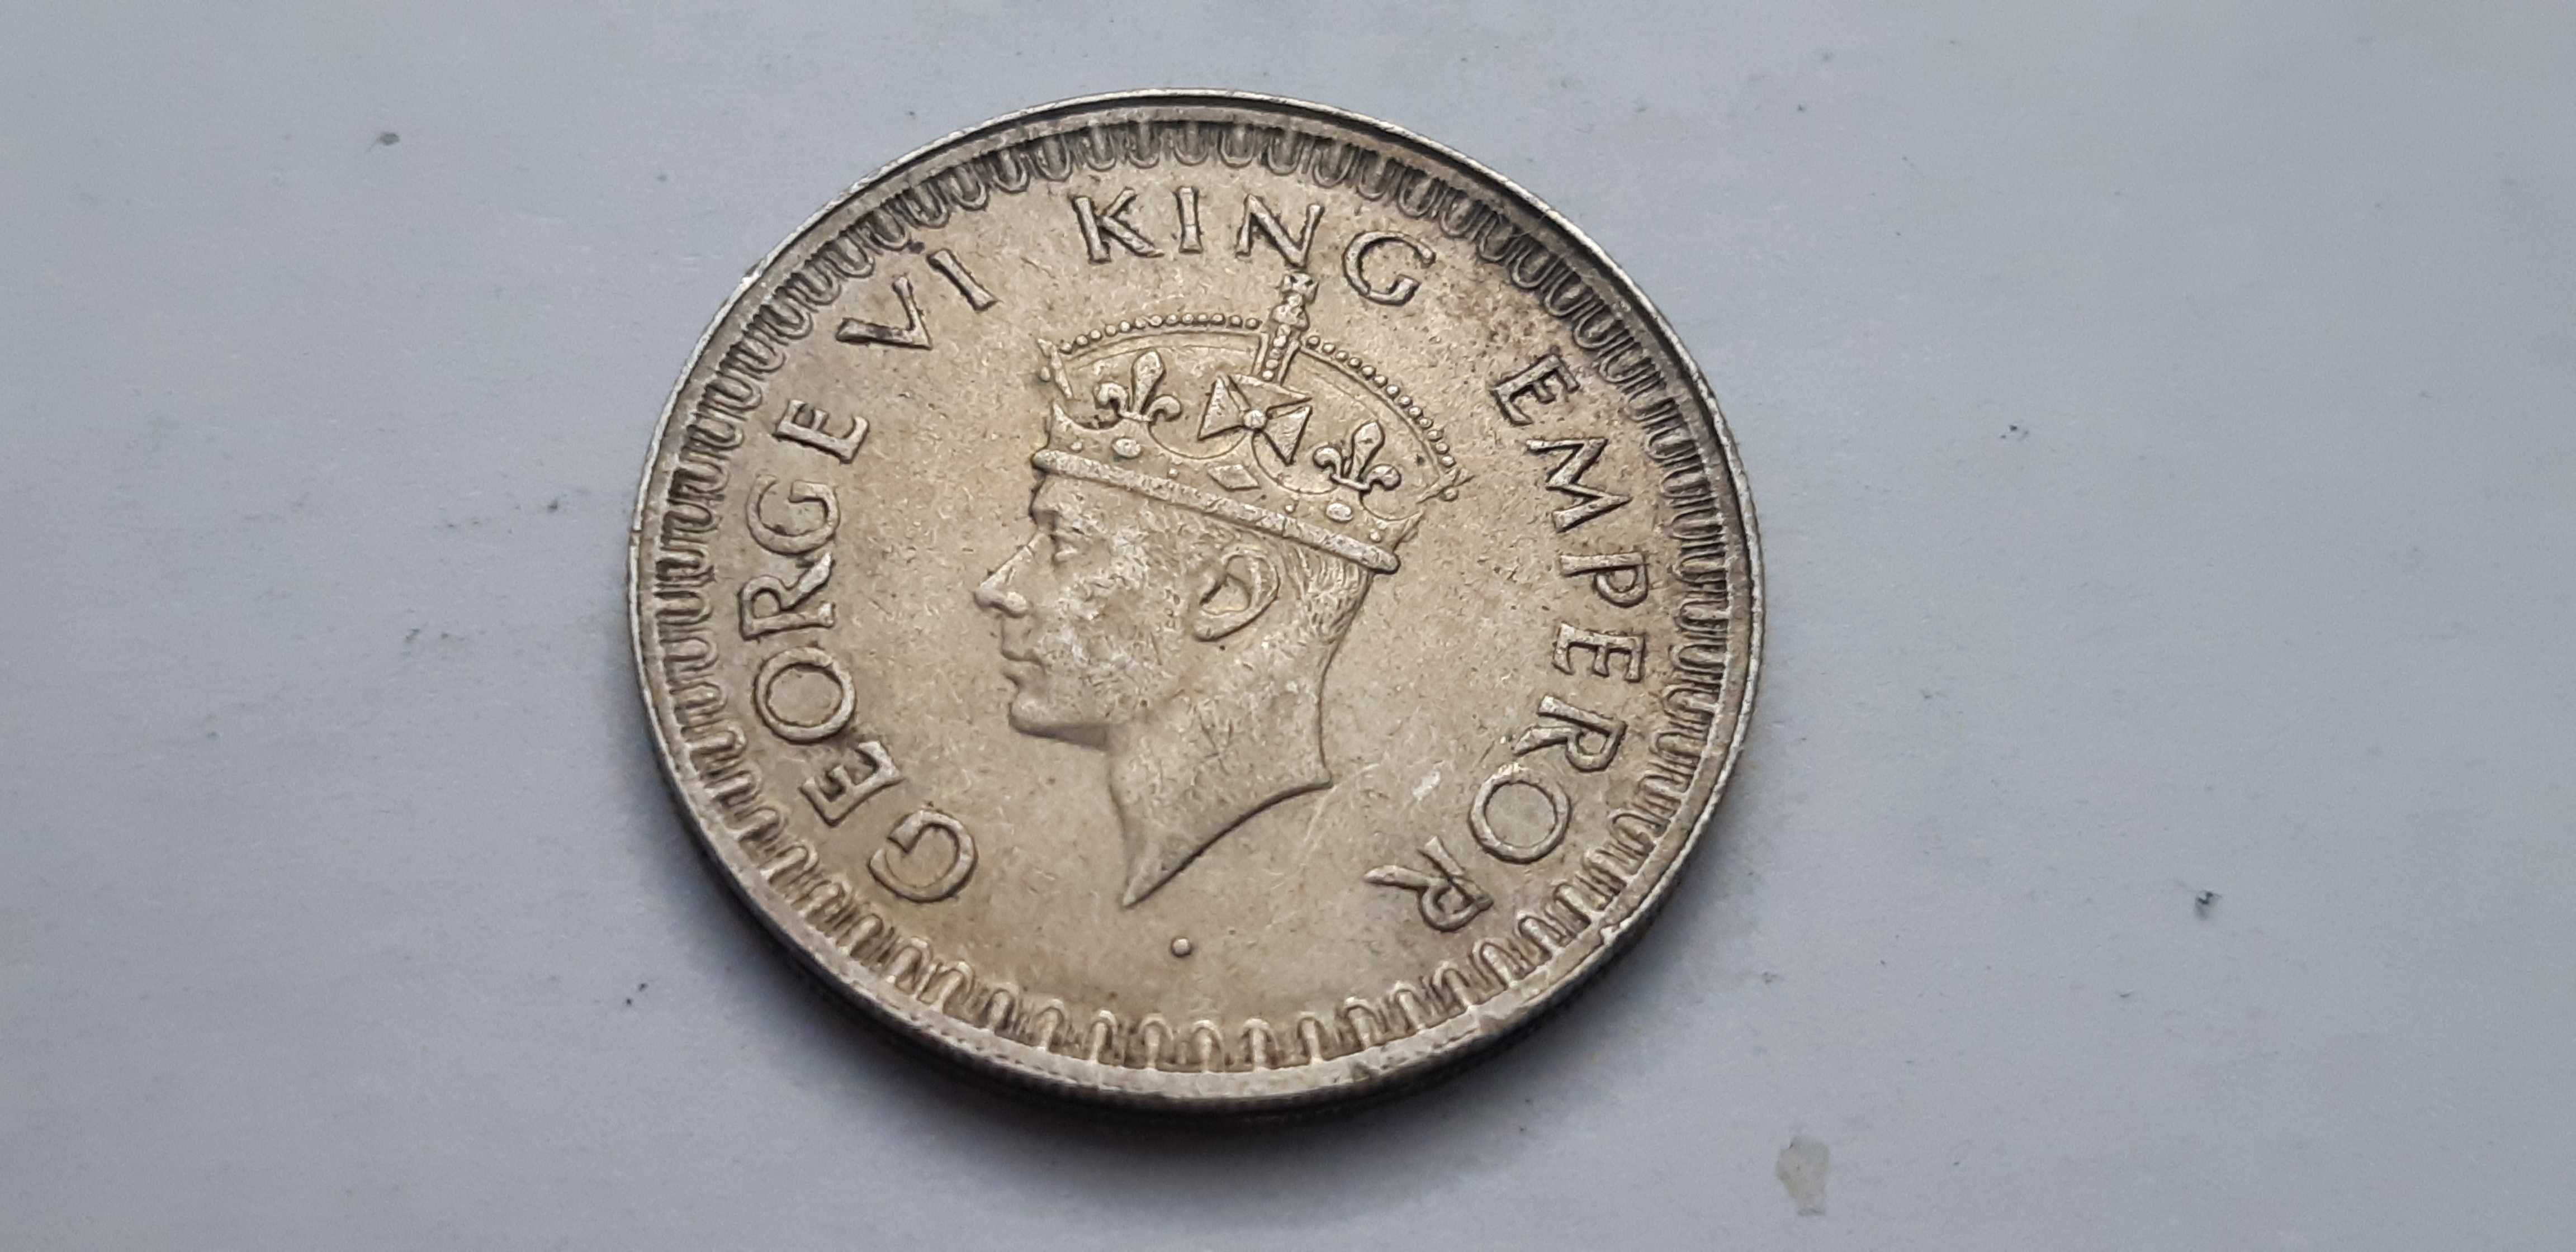 Indie Brytyjskie 1/2 Rupii 1943 rok - real foto - srebro